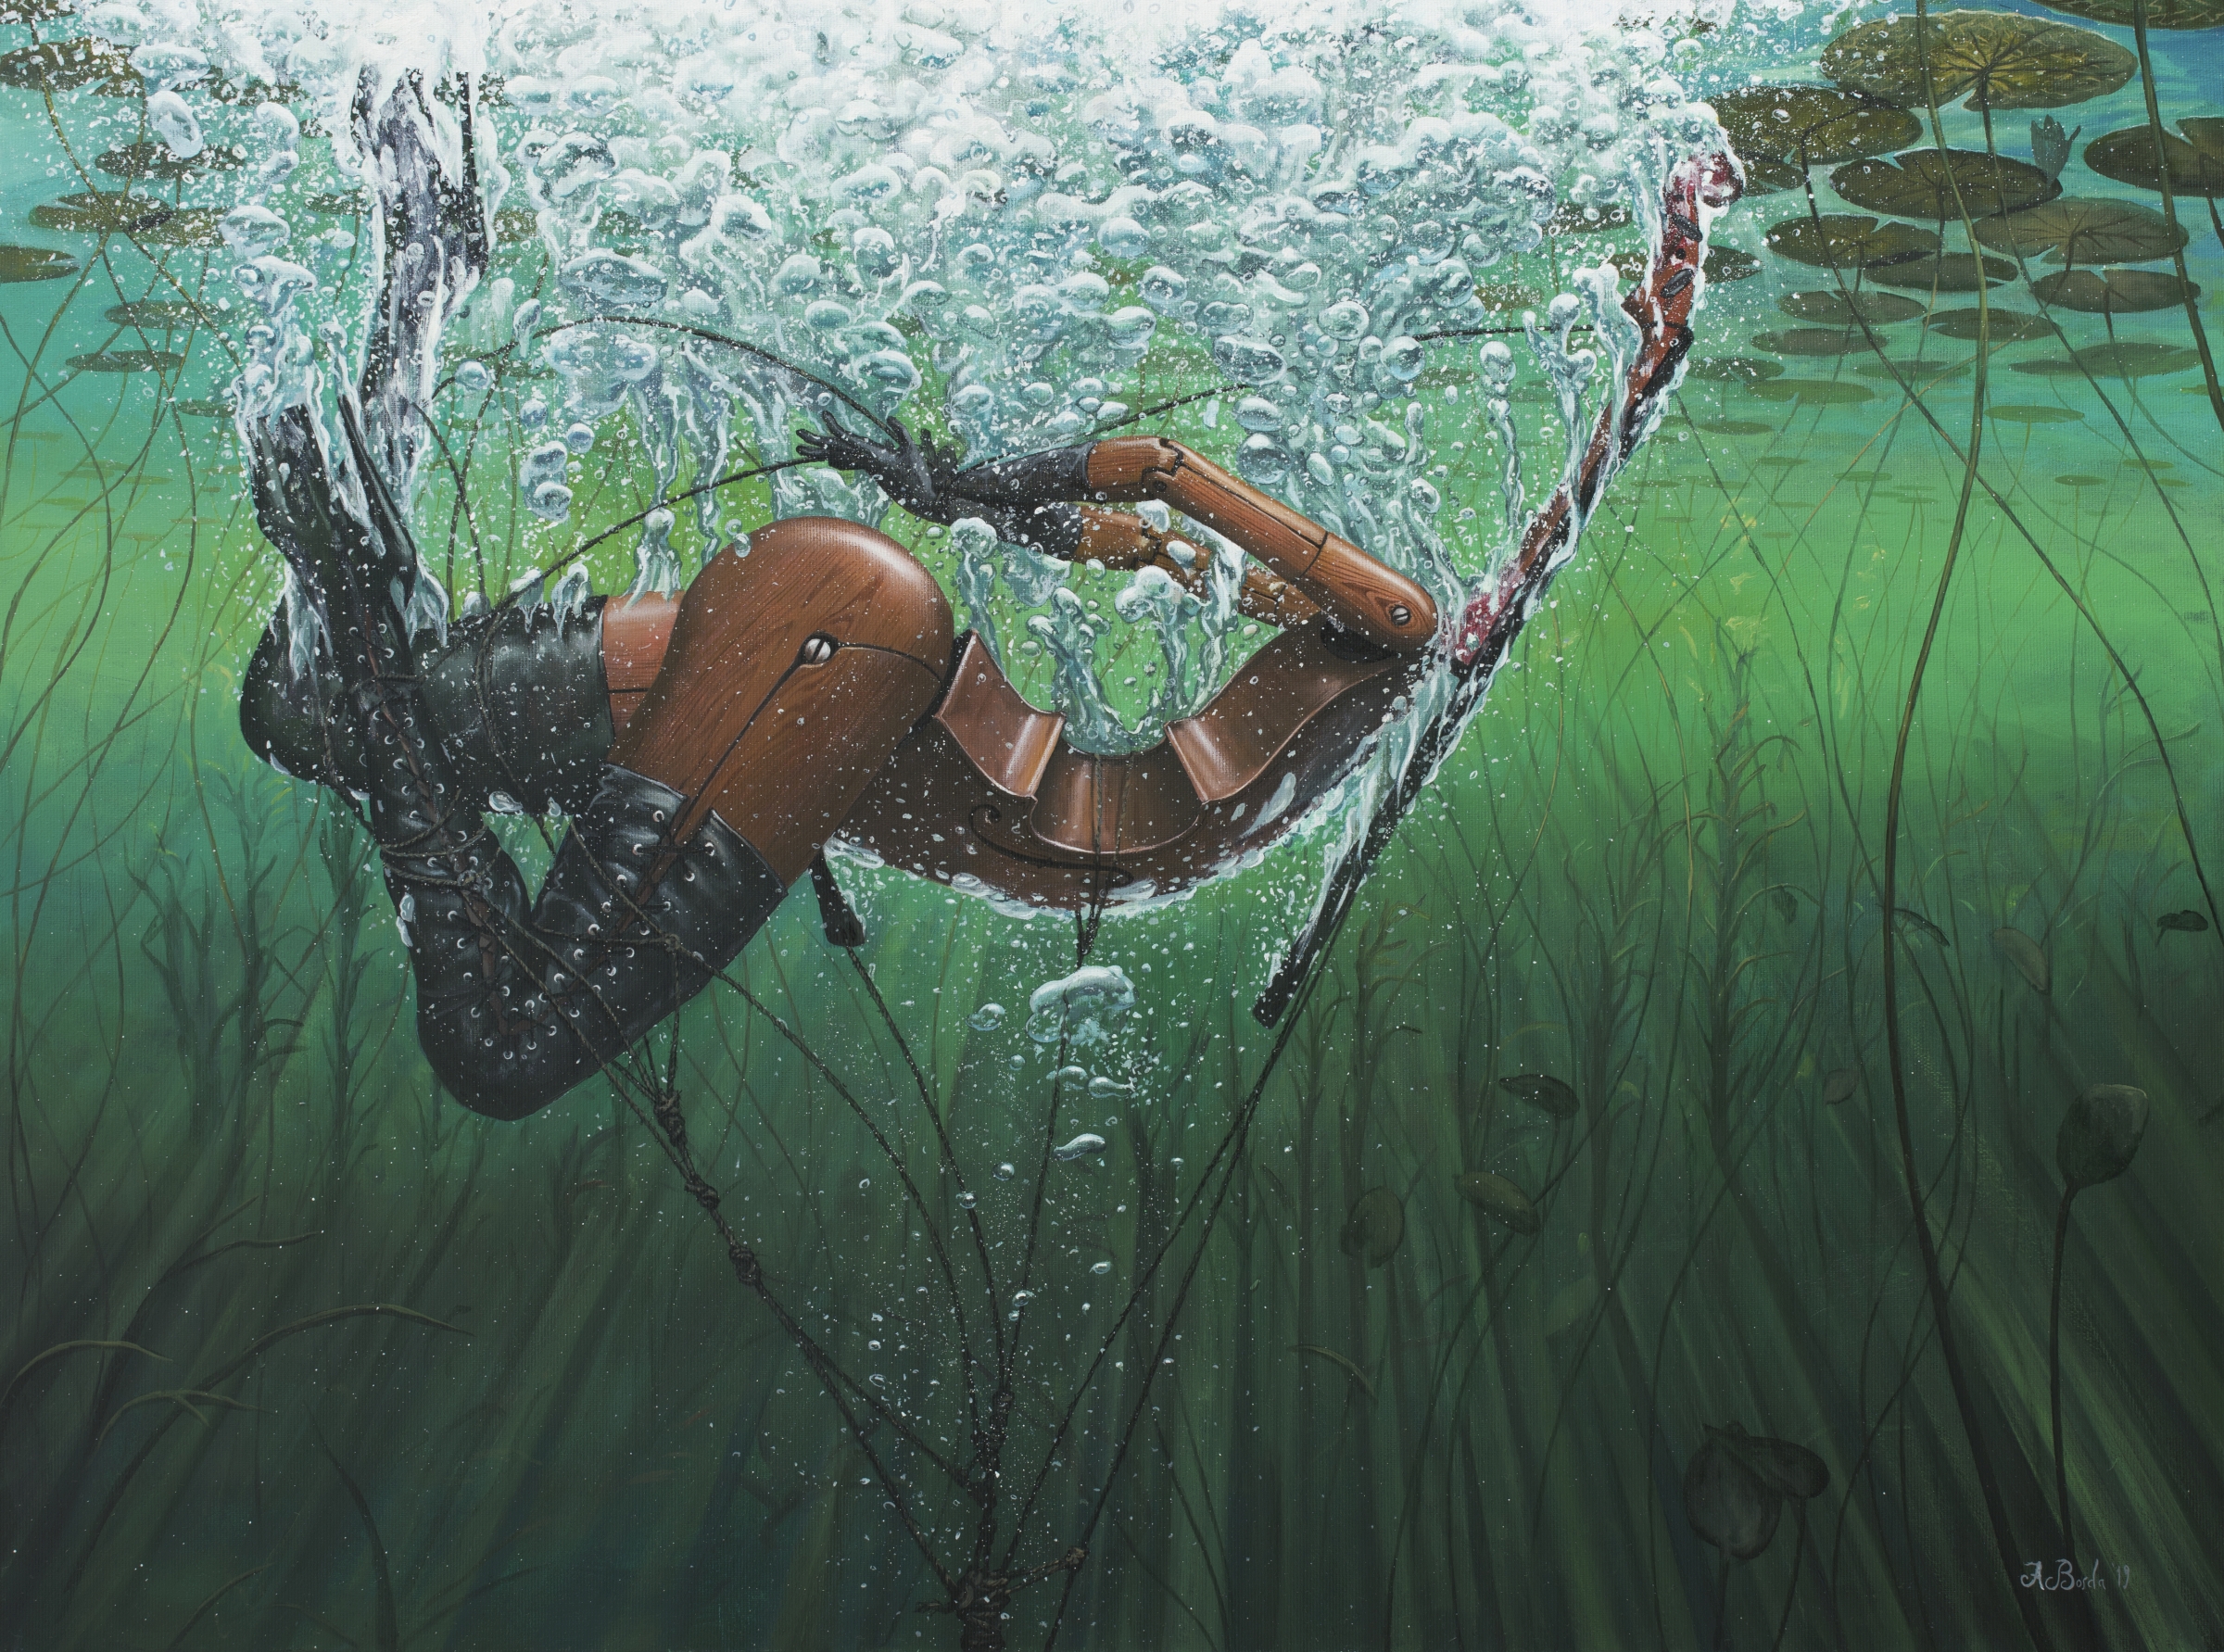 Artwork Painting Adrian Borda Surreal Underwater Torso Musical Instrument Bubbles Plants Elbow Glove 2400x1783